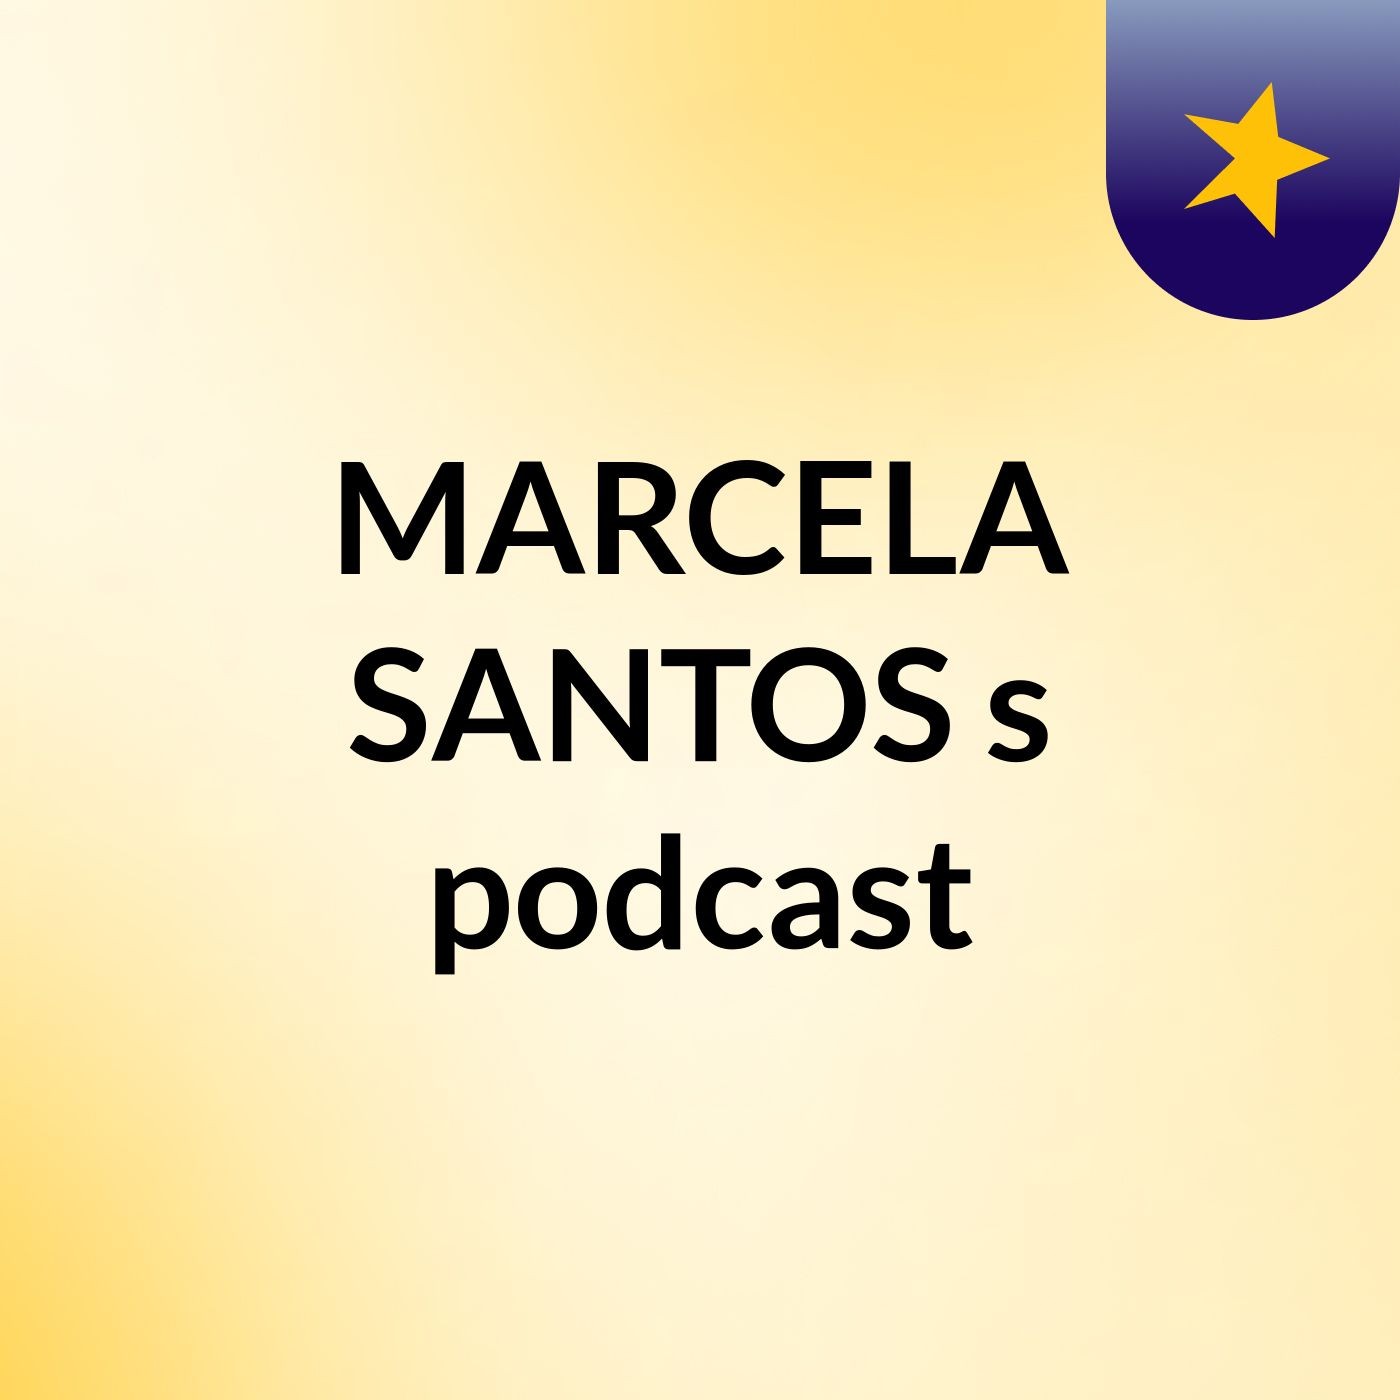 MARCELA SANTOS's podcast